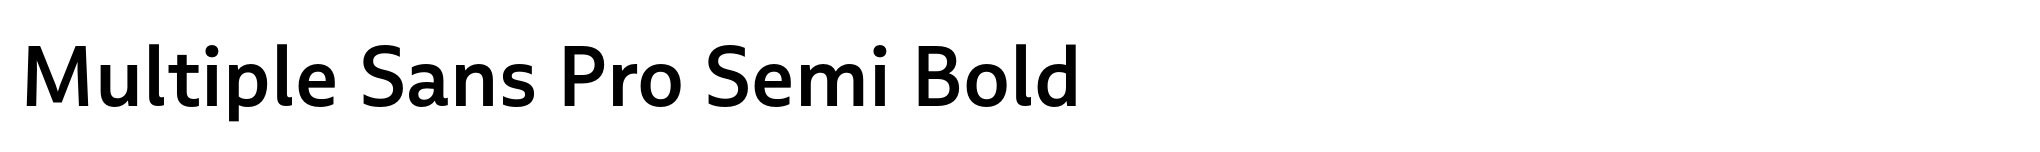 Multiple Sans Pro Semi Bold image